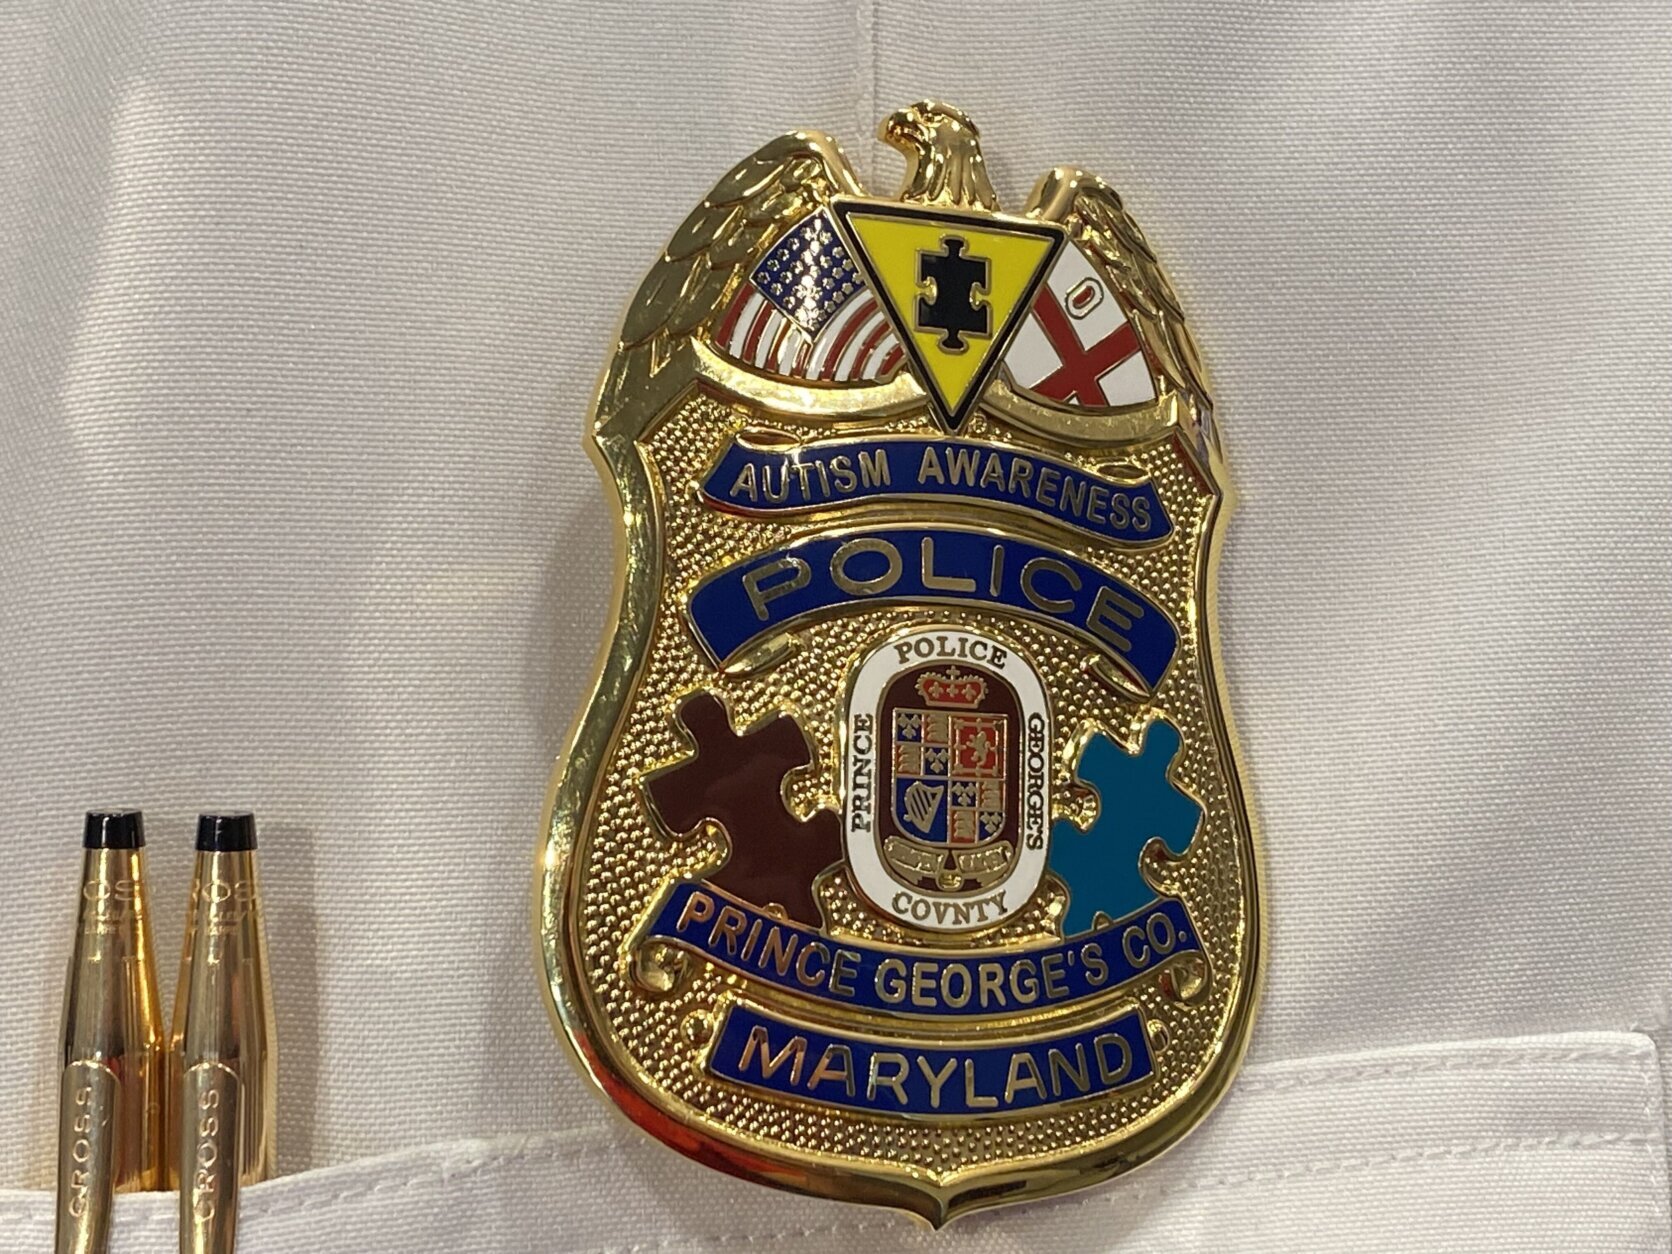 Prince George's County police badge